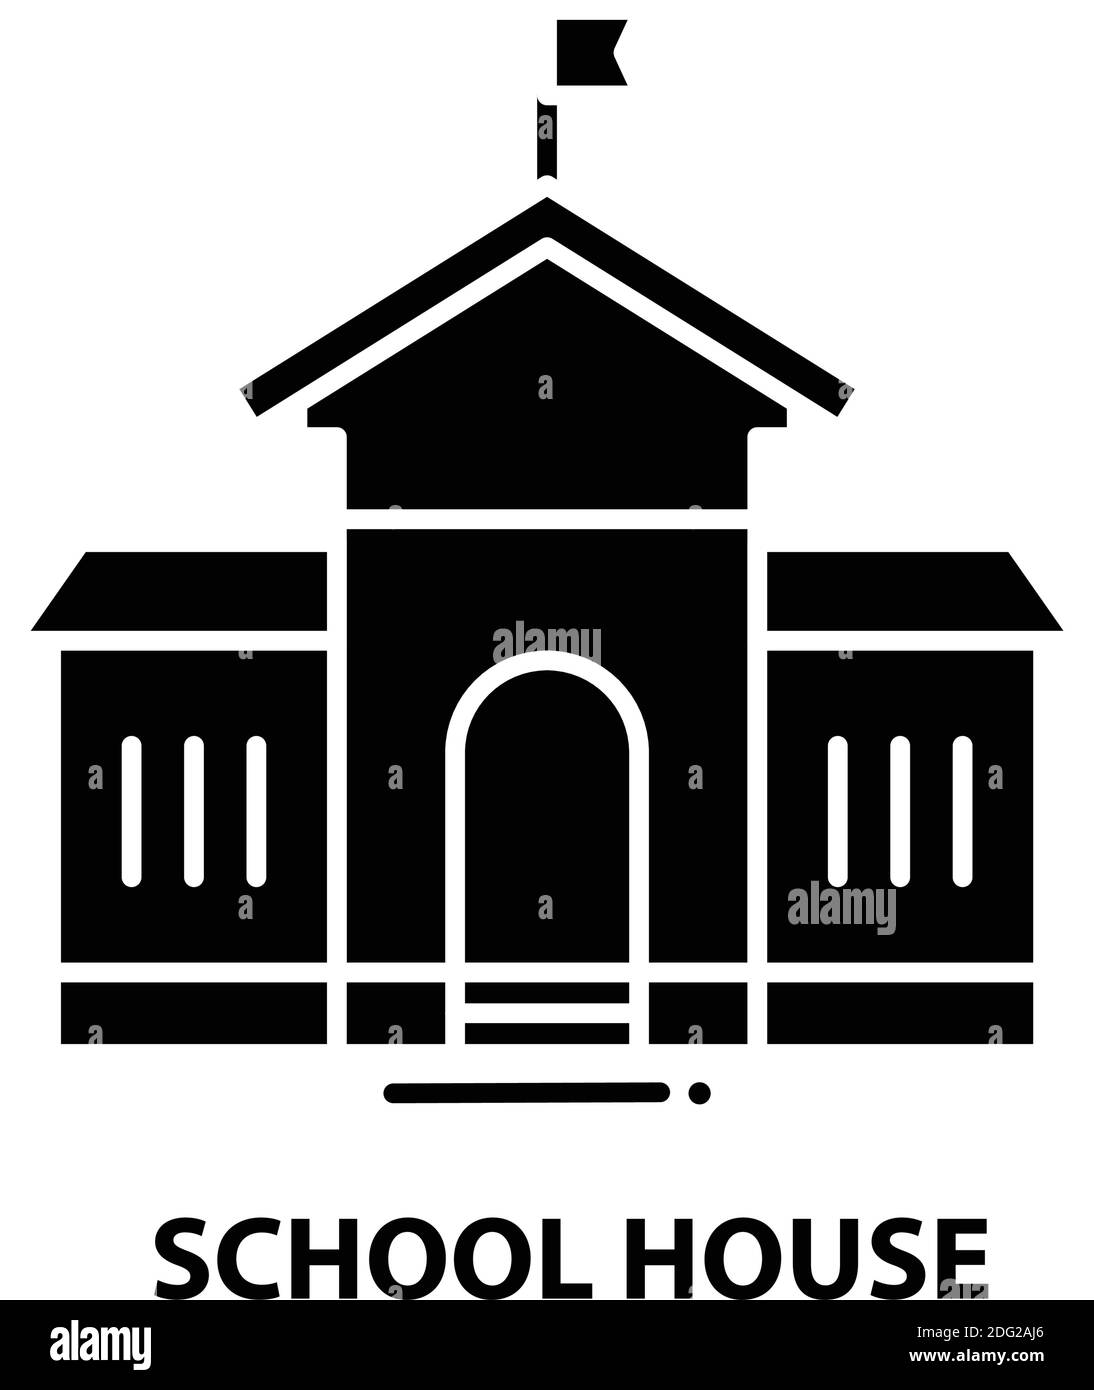 school house icon, black vector sign with editable strokes, concept illustration Stock Vector